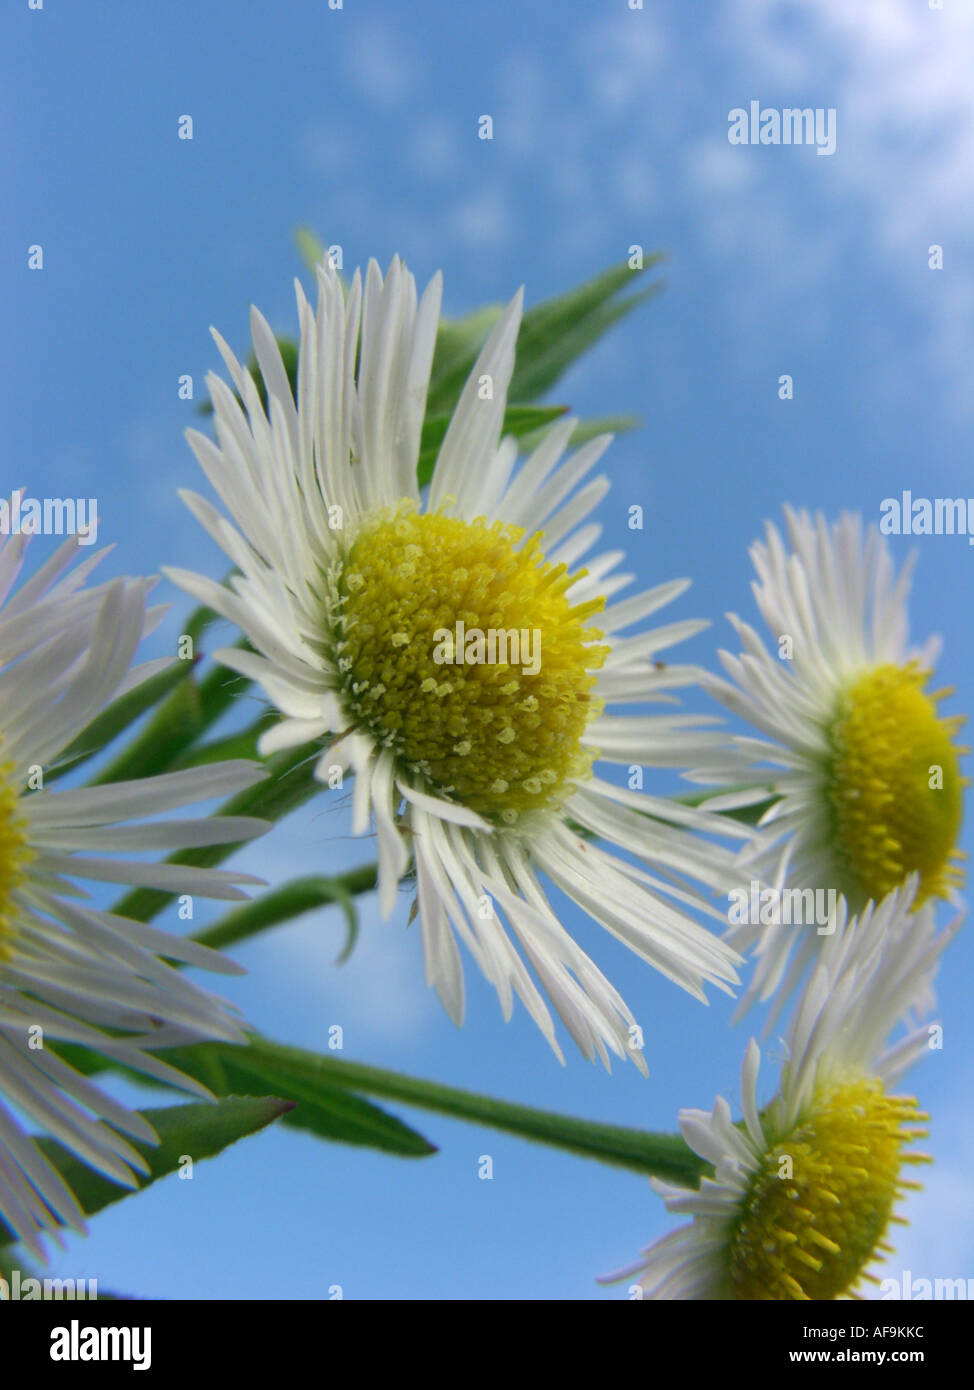 annual fleabane, daisy fleabane, sweet scabious, Eastern daisy fleabane, white-top fleabane (Erigeron annuus), inflorescence Stock Photo